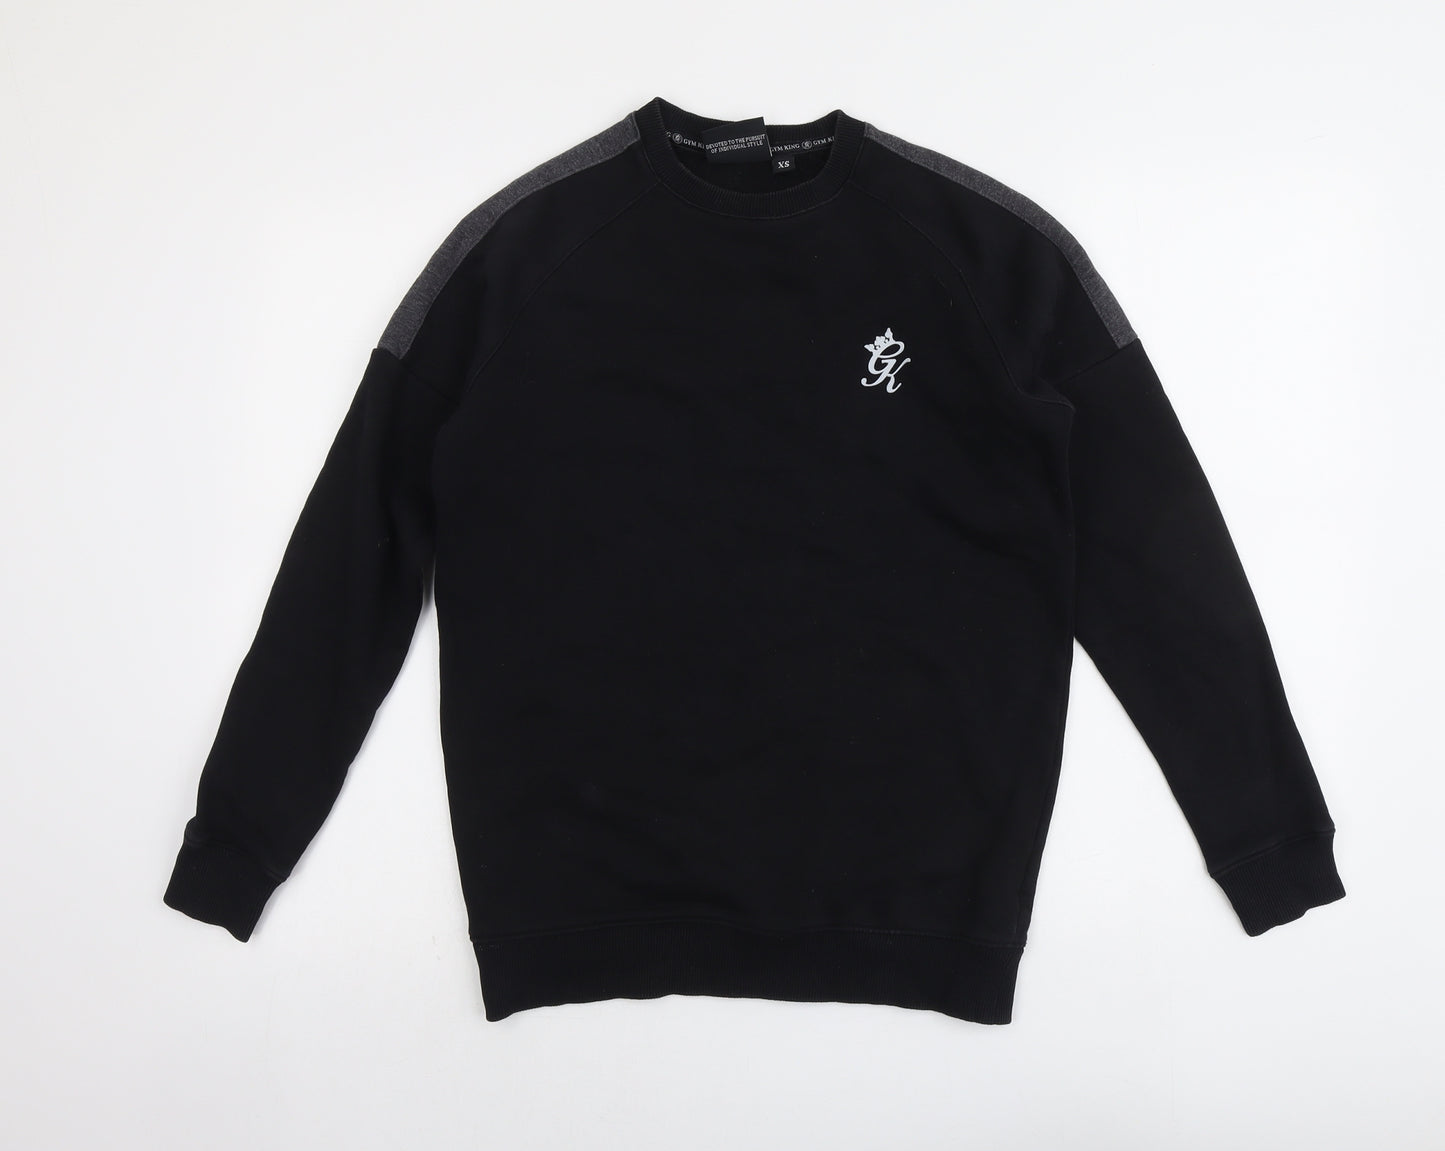 Gym King Mens Black Cotton Pullover Sweatshirt Size XS